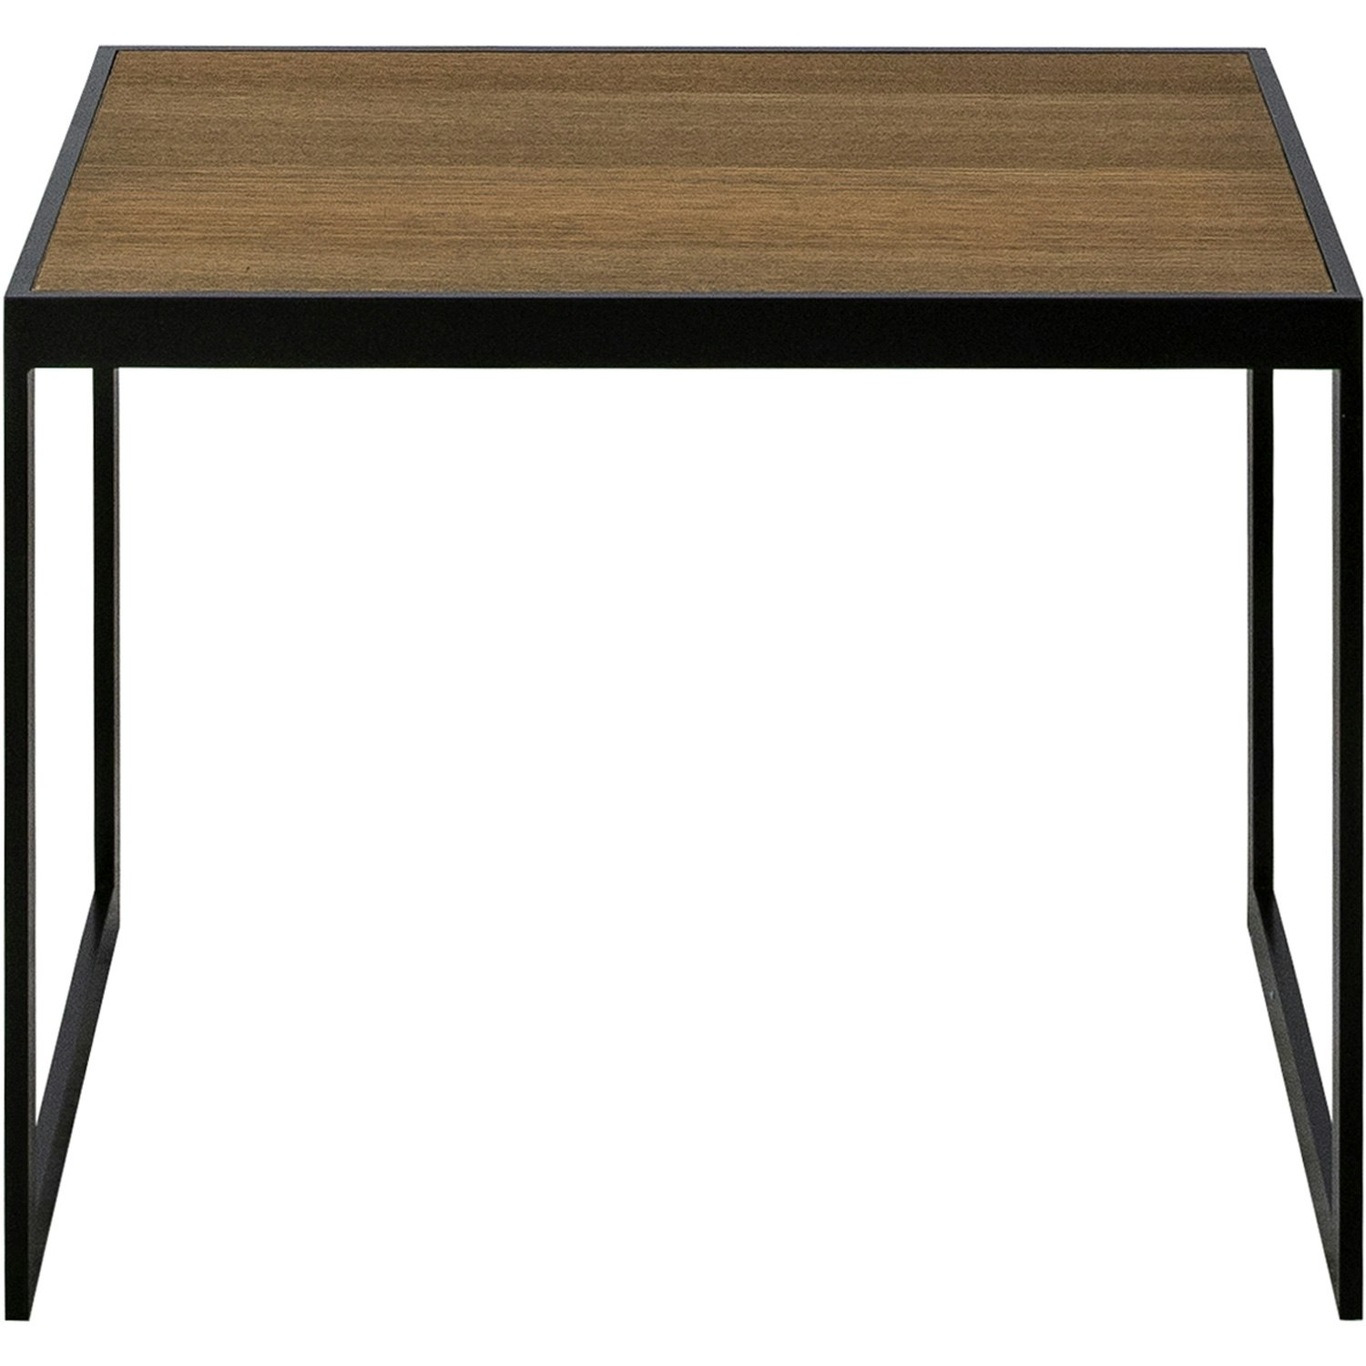 Square Side Table 41x56x43 cm, Black/Burned Walnut